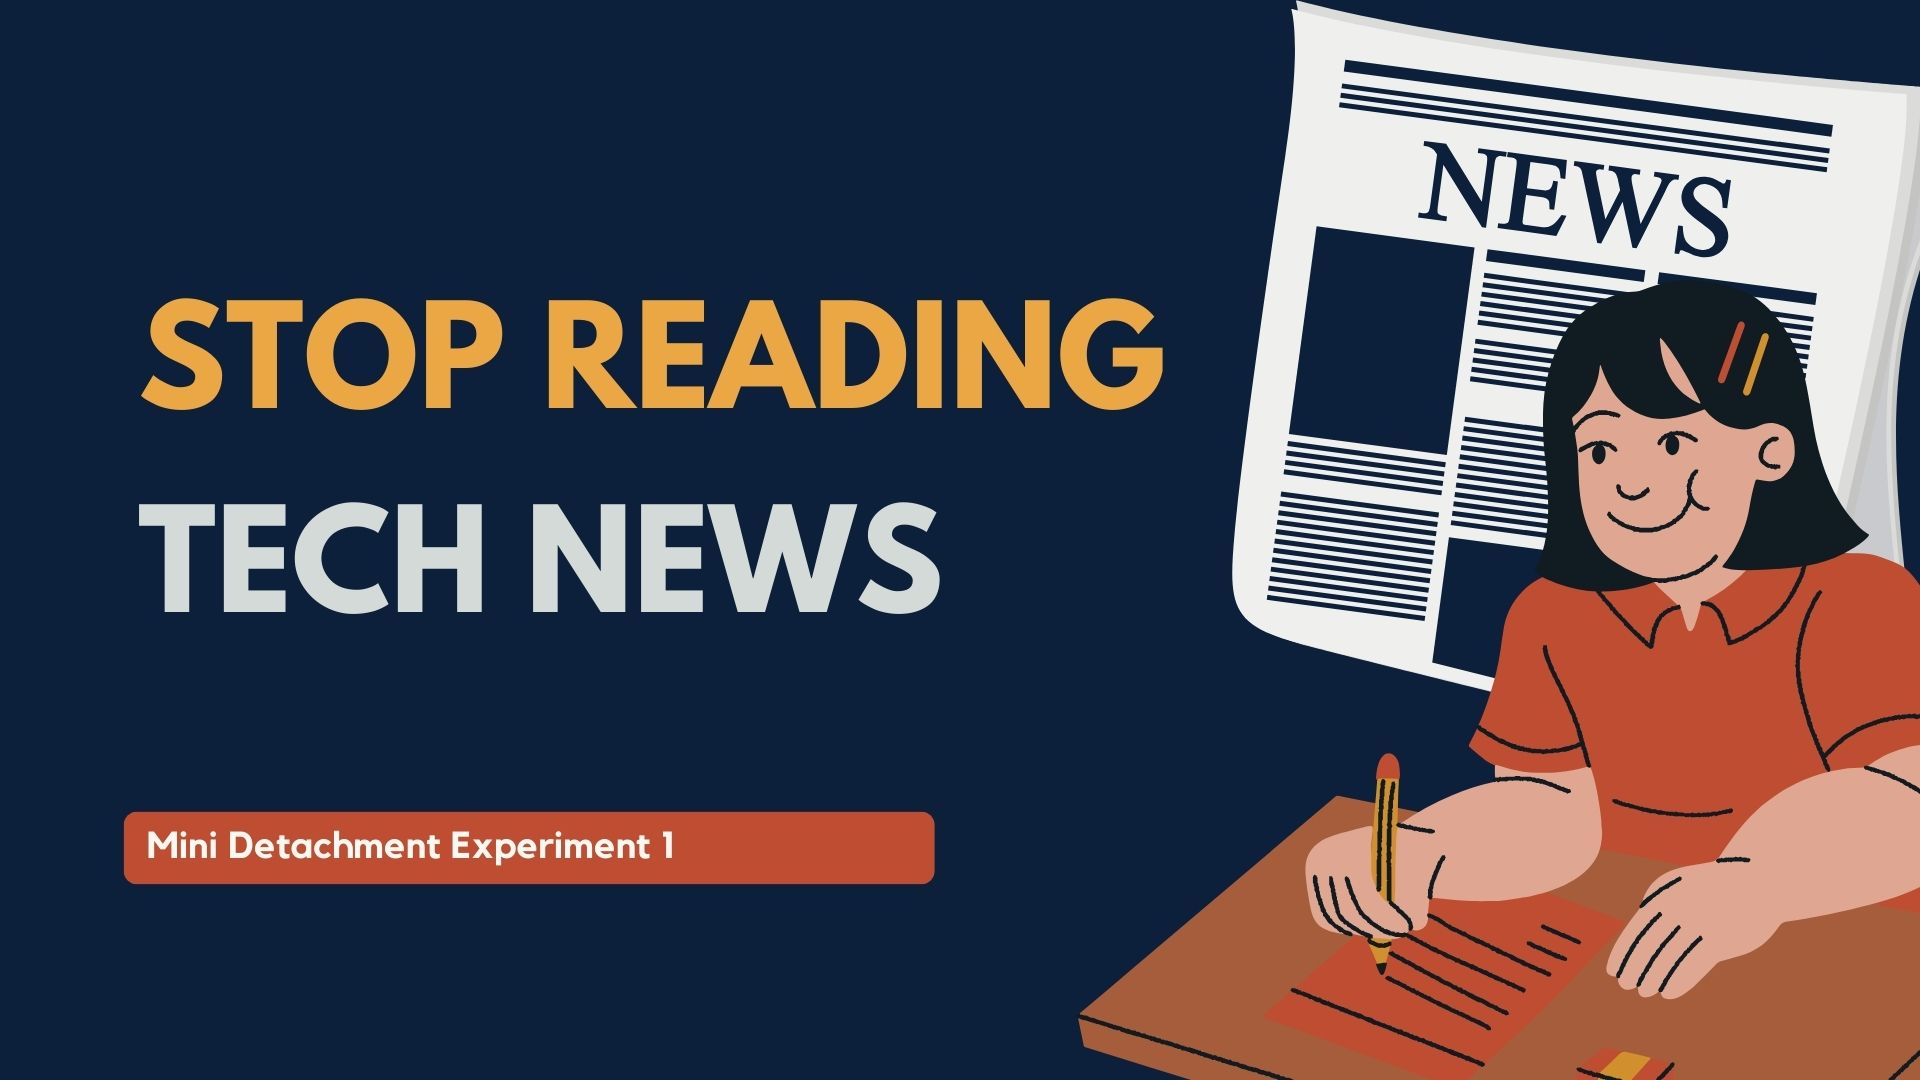 Mini-Detachment Experiment 1 - Stop reading tech news